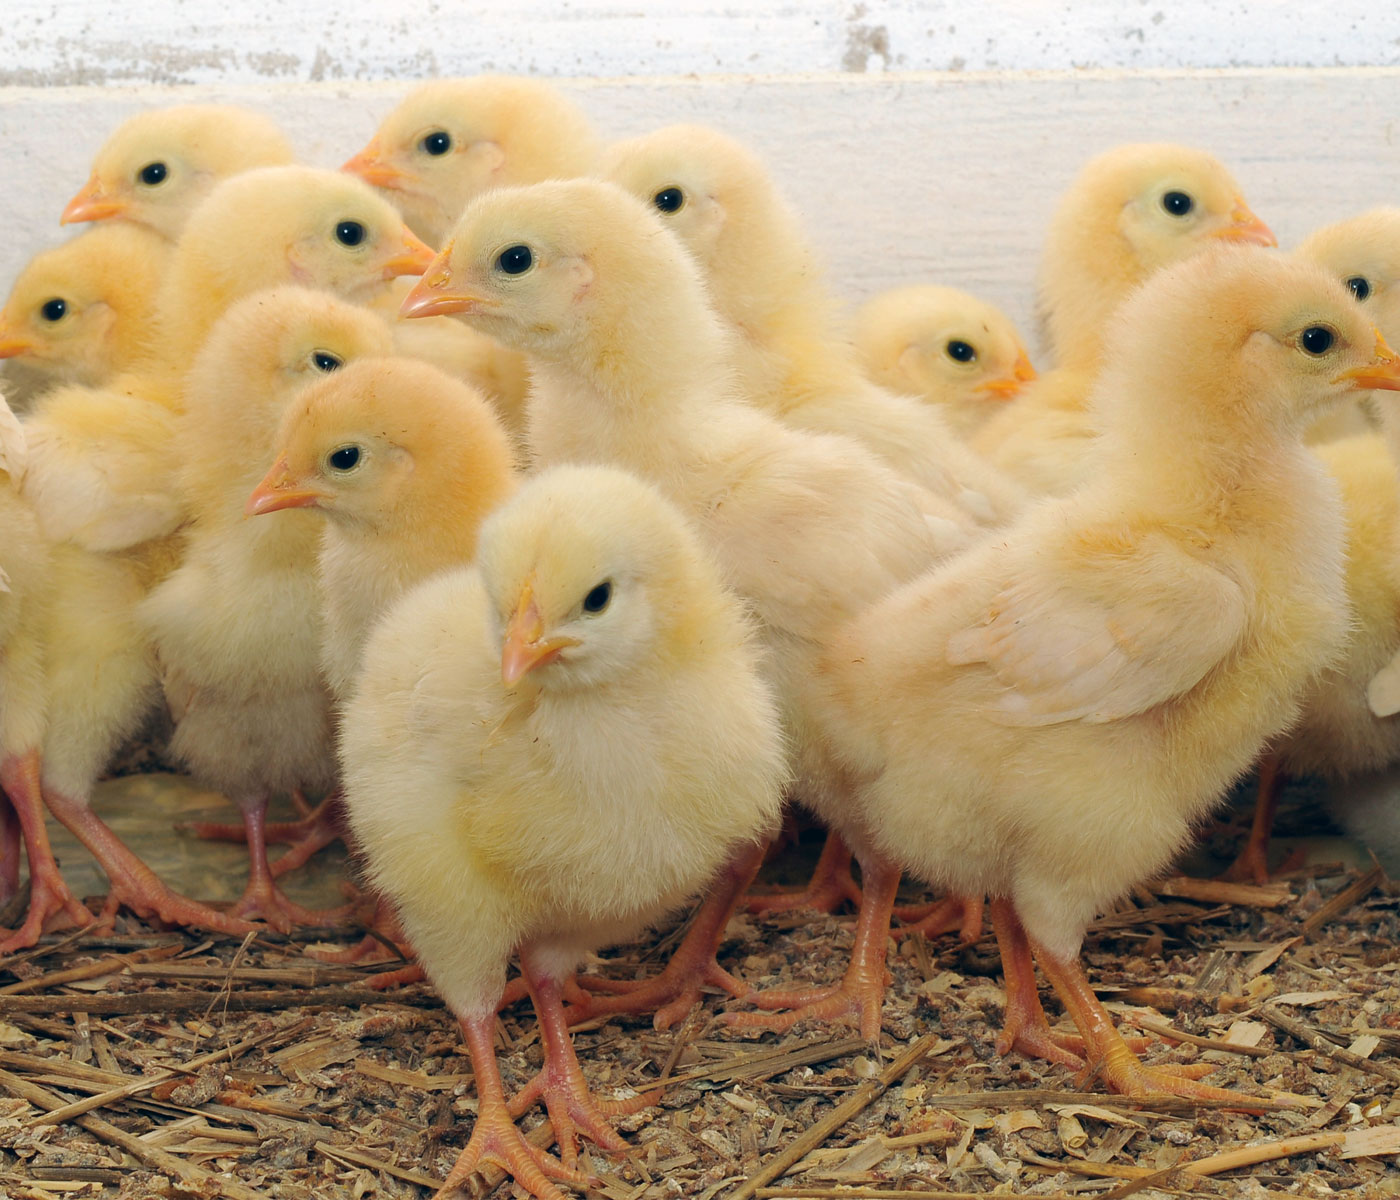 Manejo, Epidemiología e Impacto Económico de enfermedades bacterianas entéricas en pollos de engorde